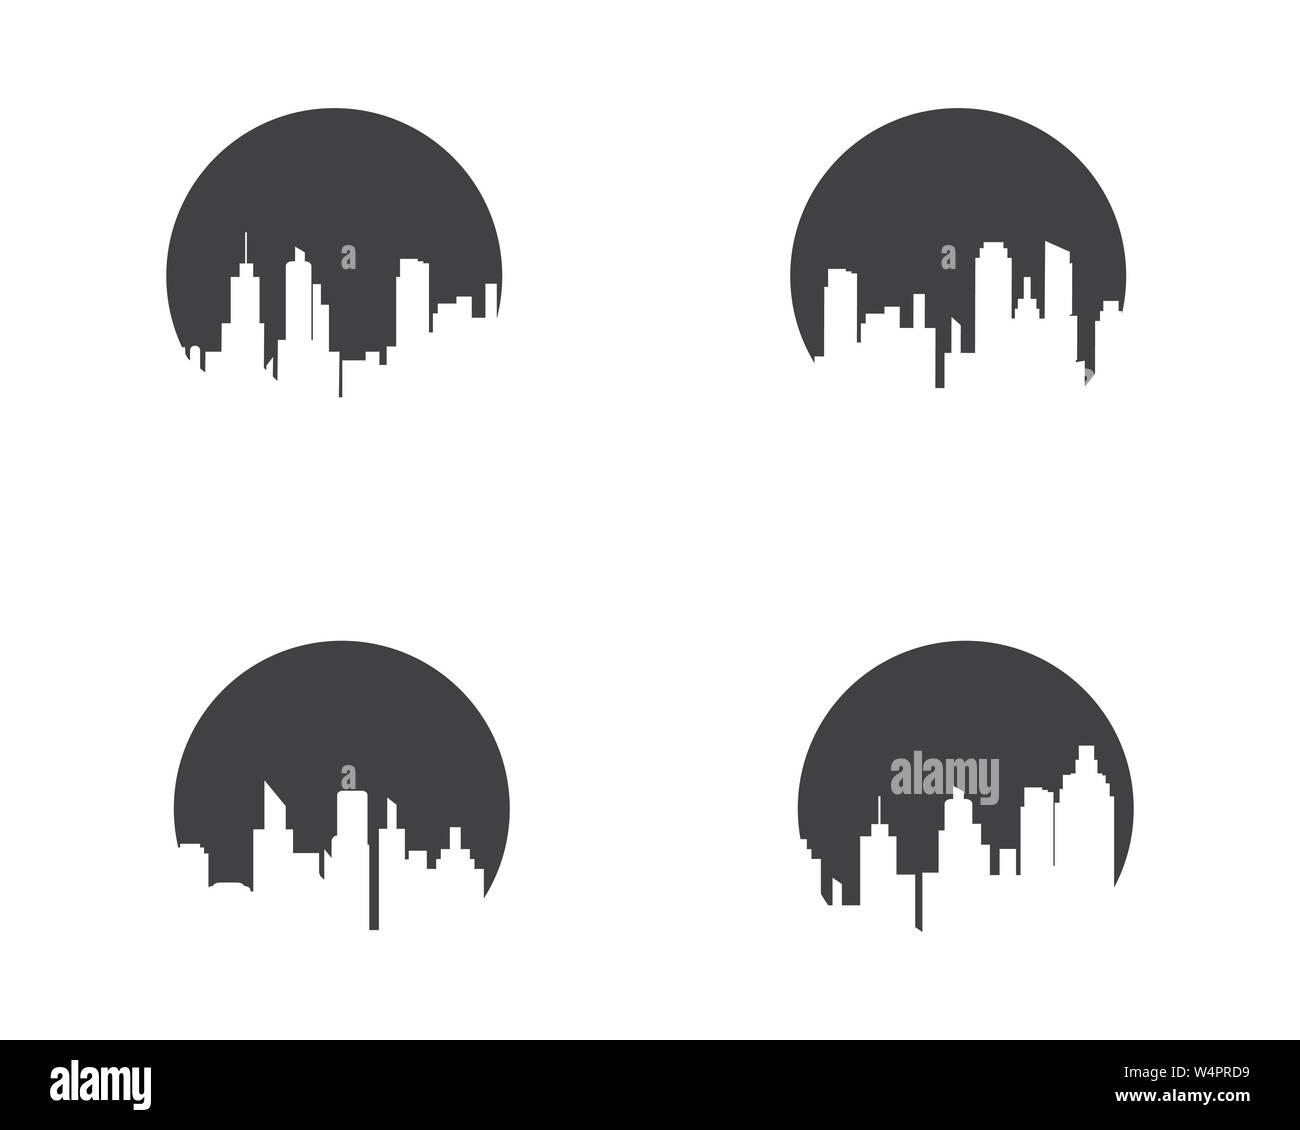 City skyline silhouette vector illustration Illustration de Vecteur